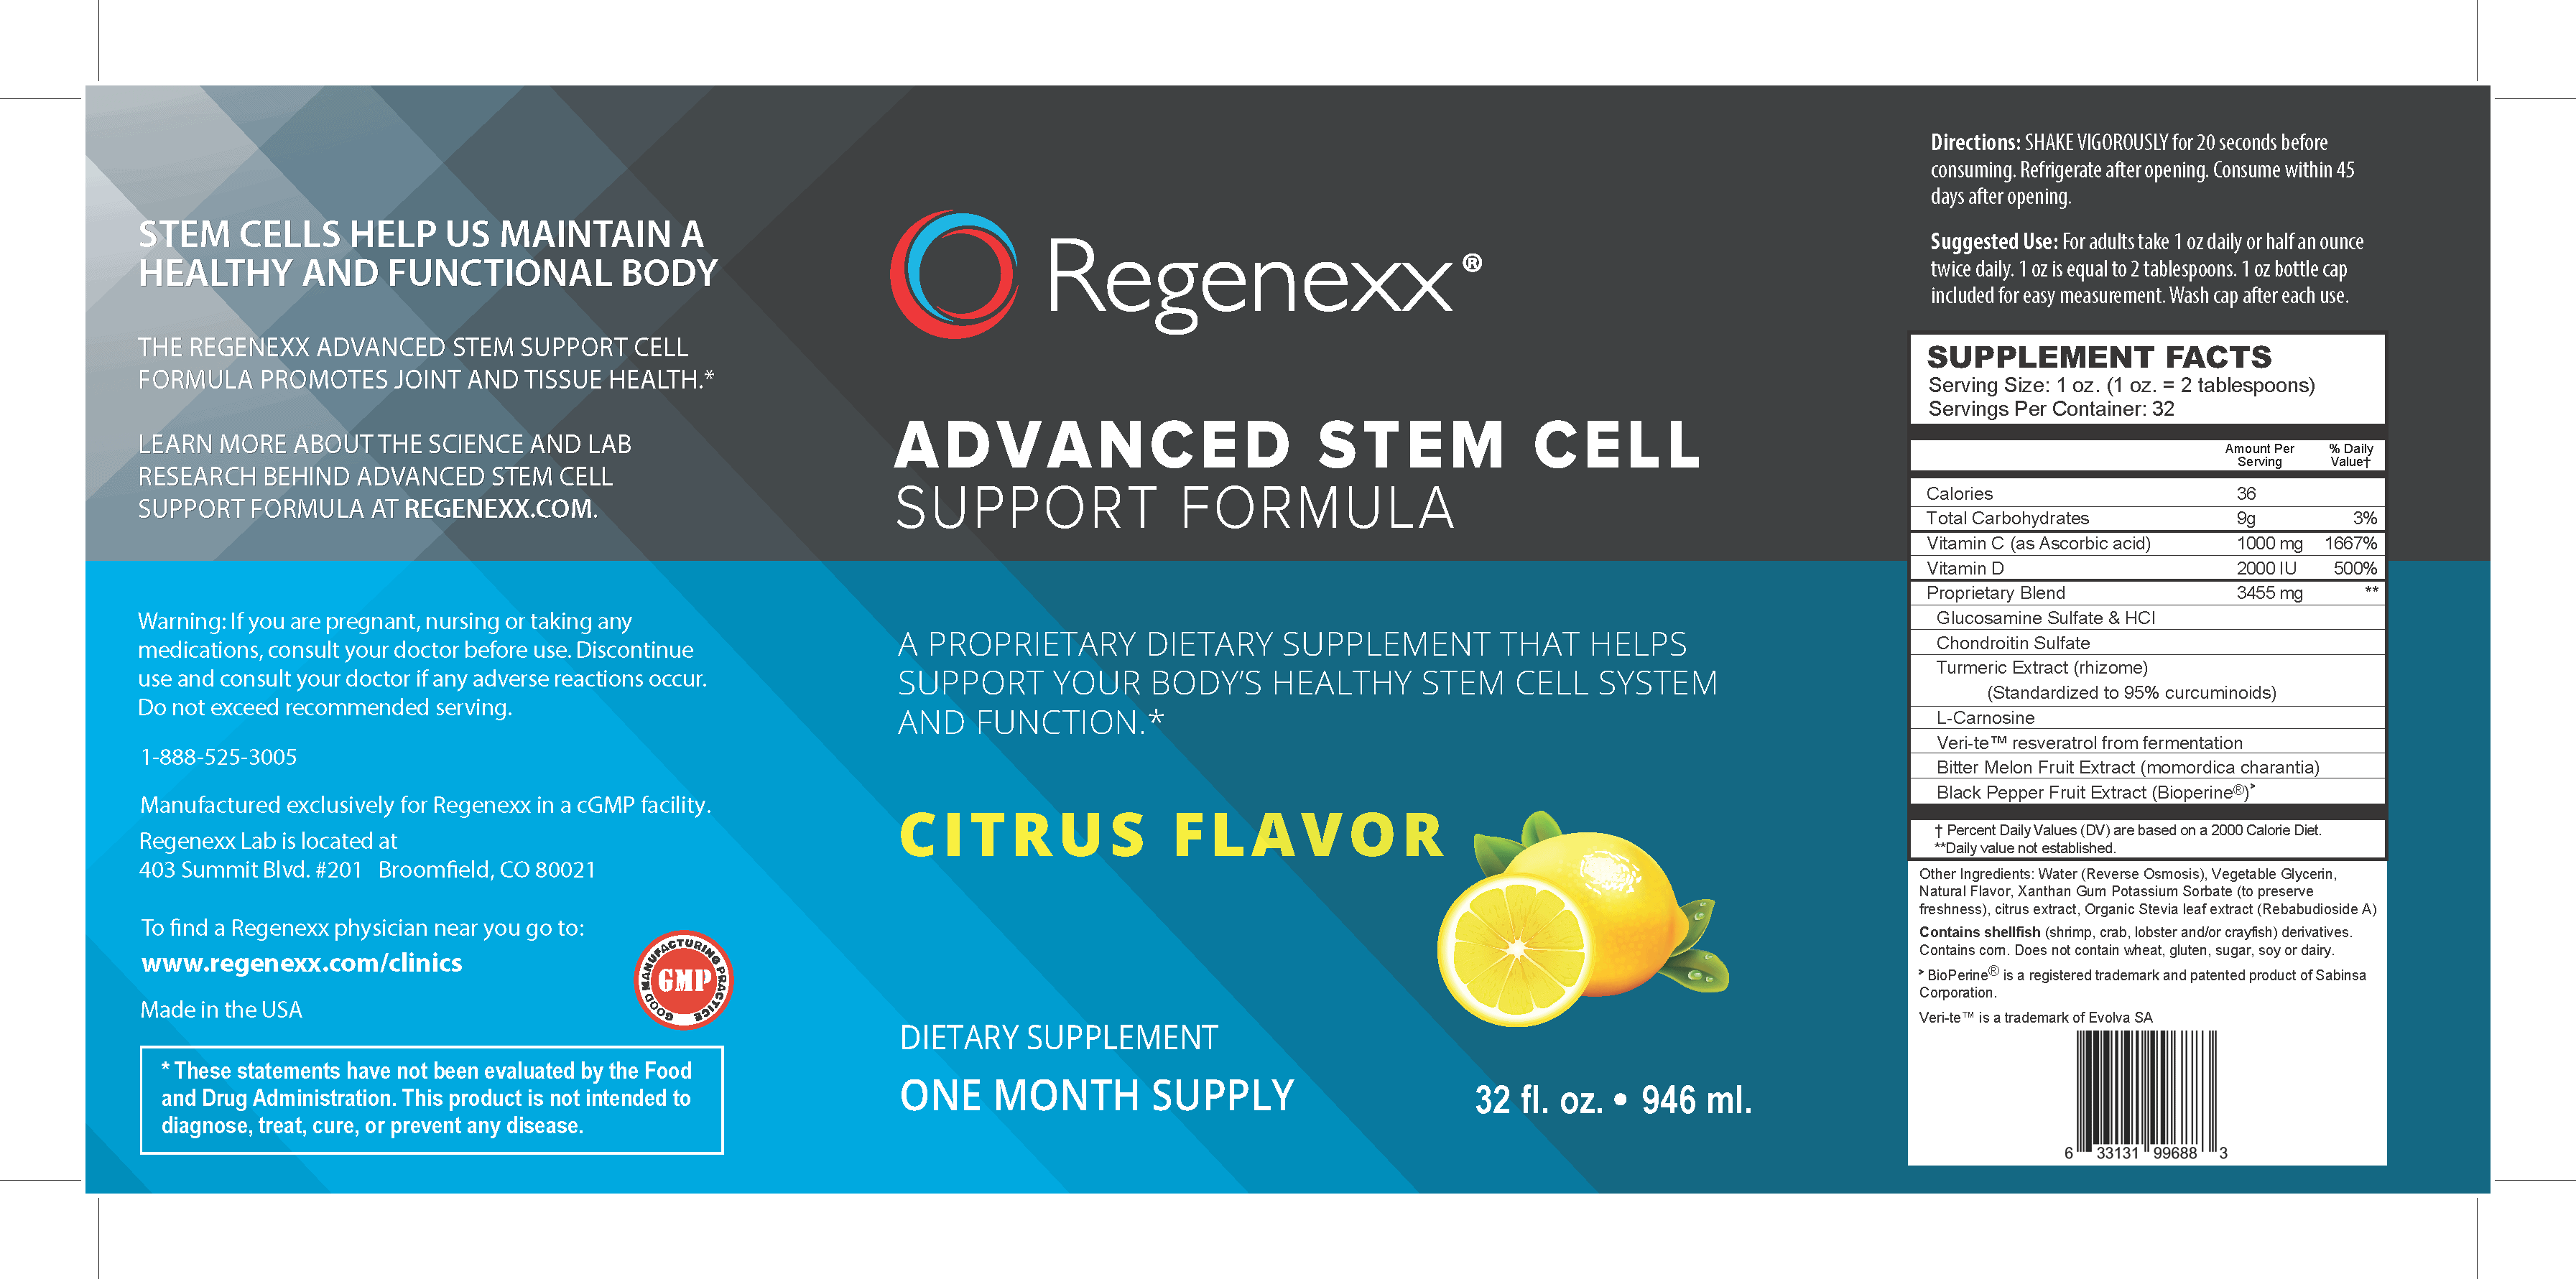 Regenexx Advanced Stem Cell Support Formula, Citrus flavor Labbel